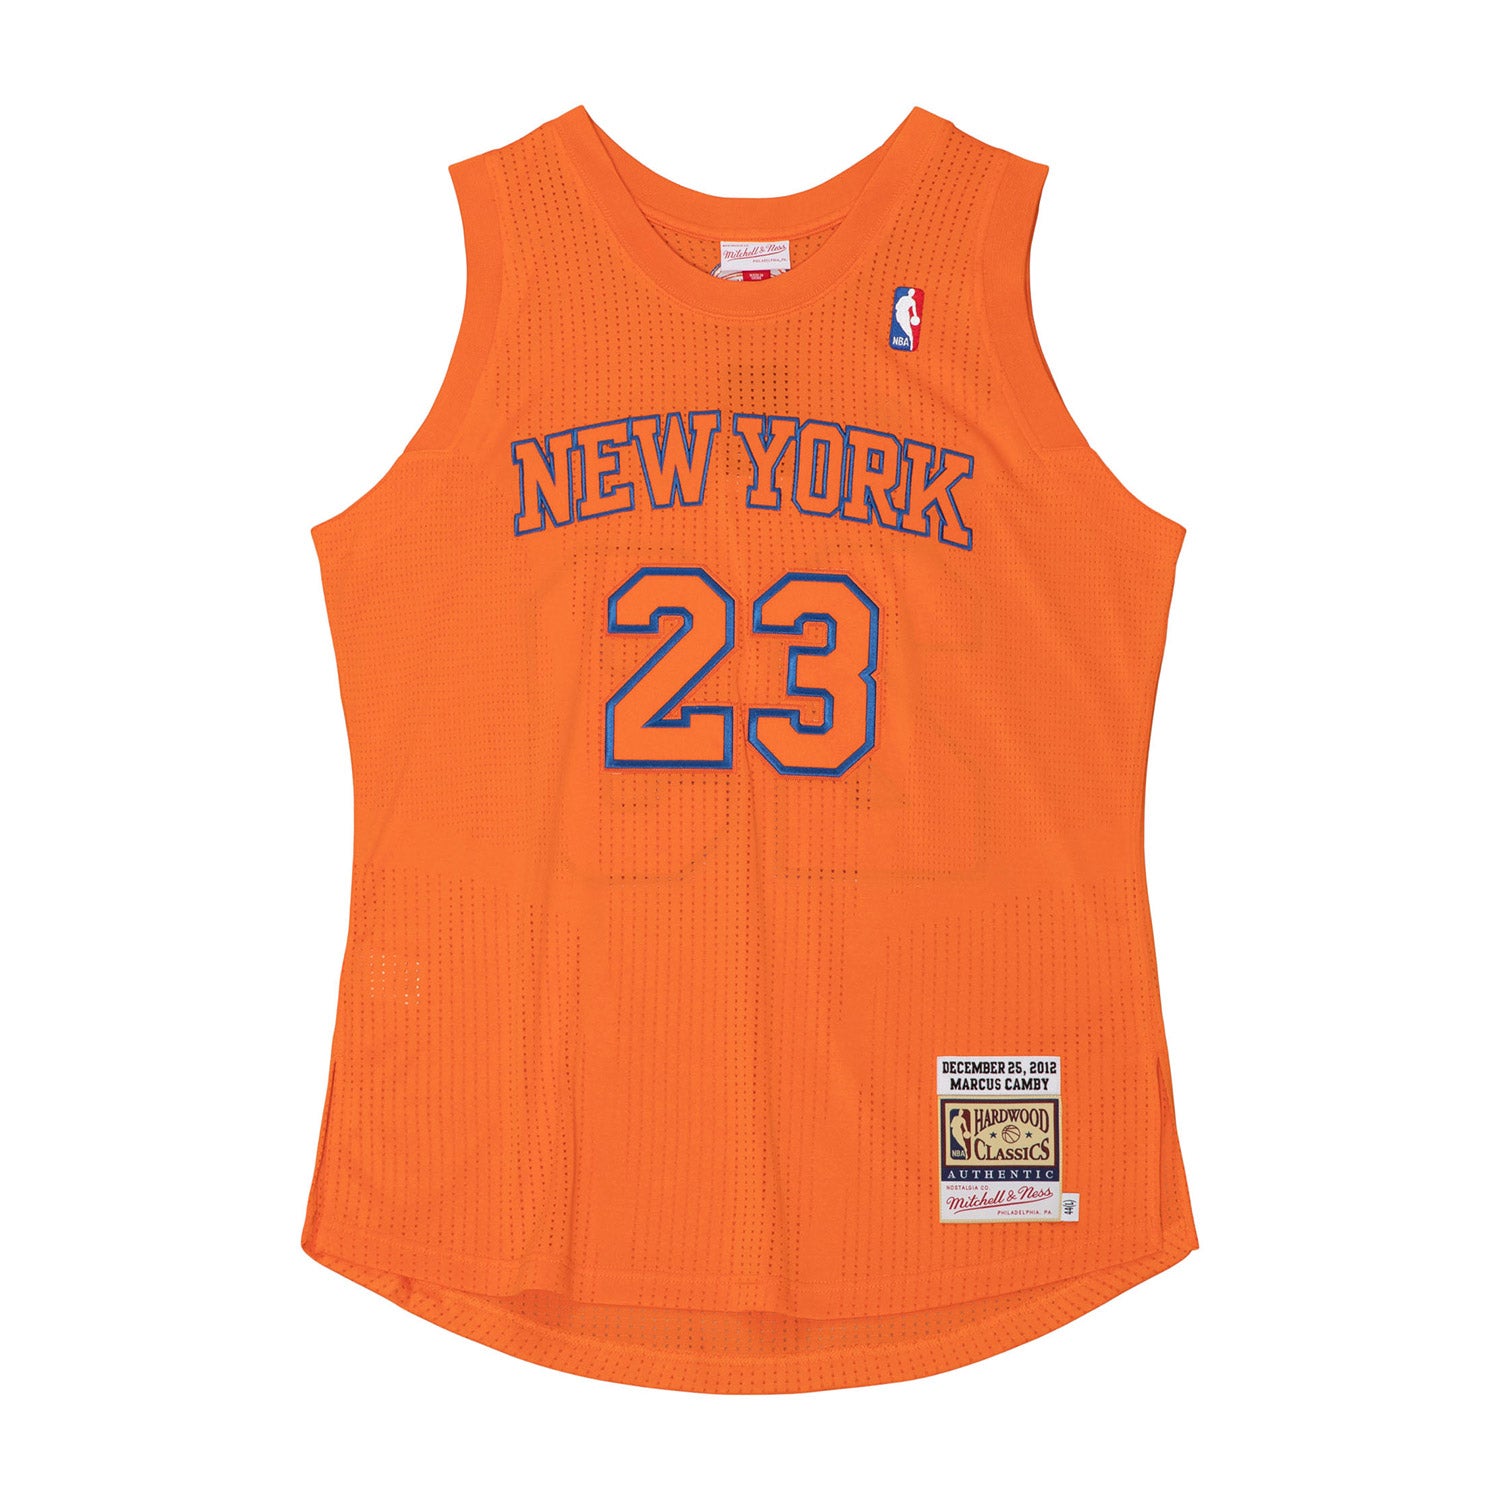 Hardwood Classics New York Knicks basketball jersey XL